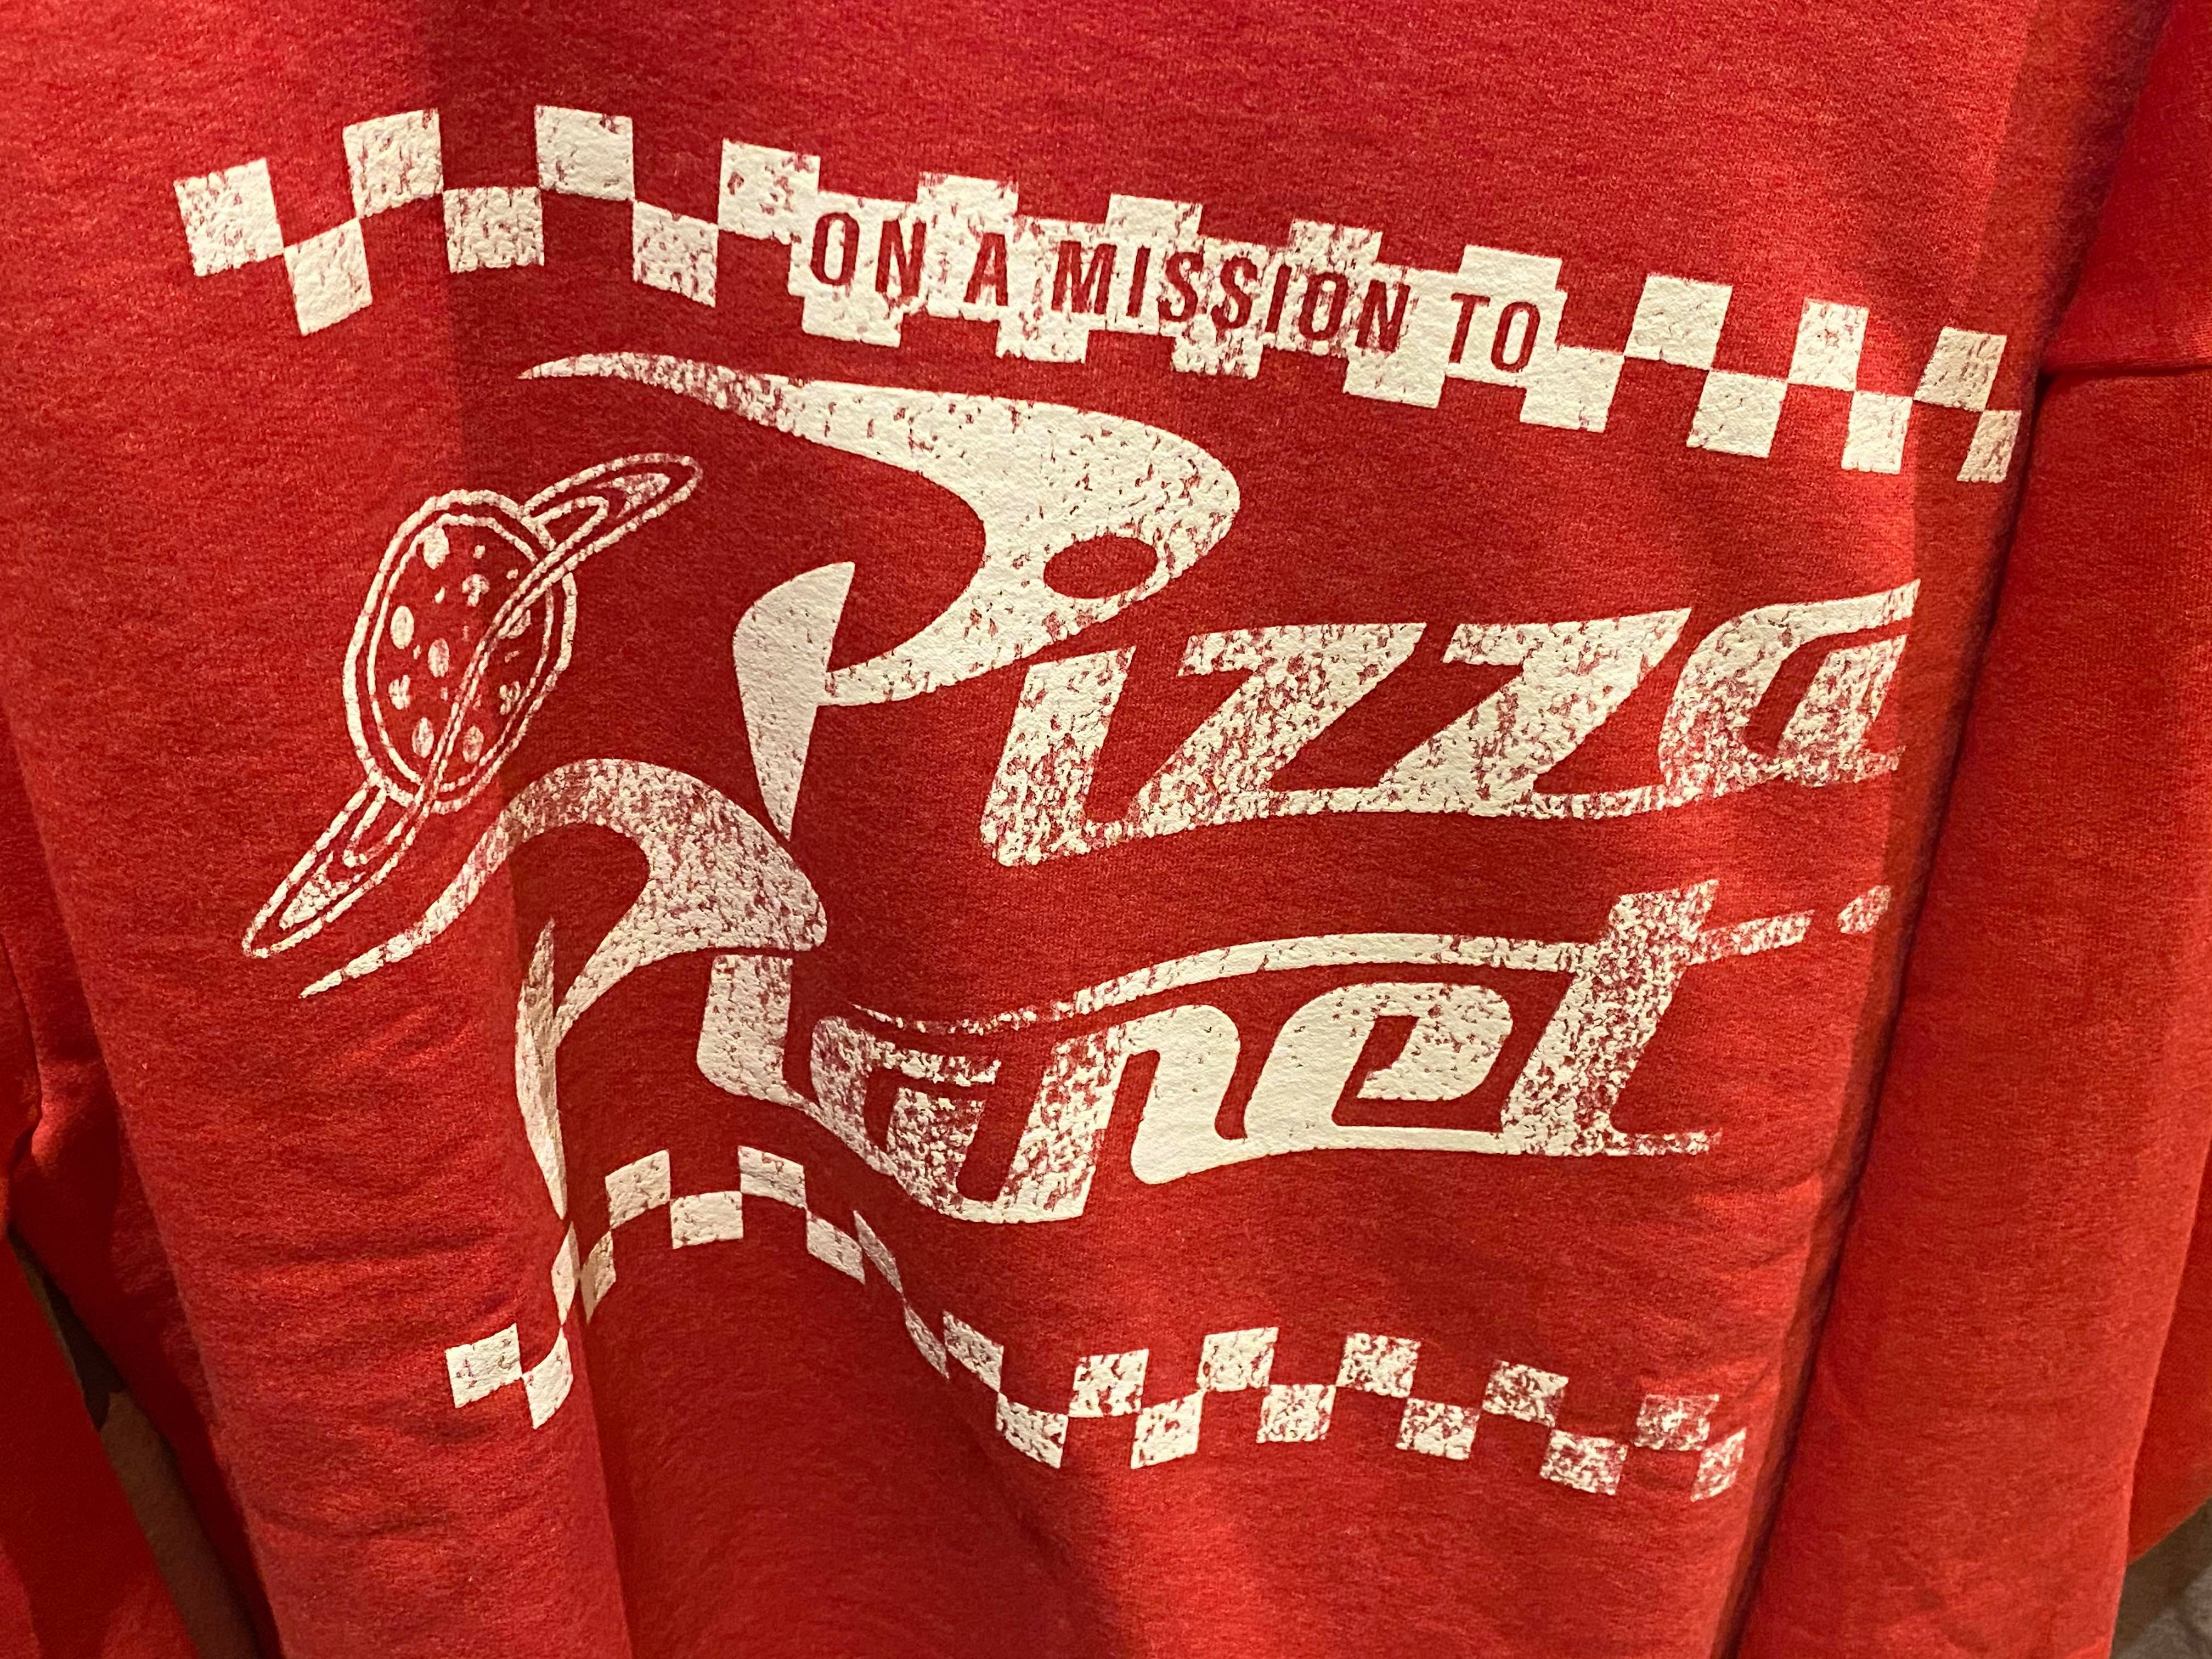 Pizza Planet Sweatshirt